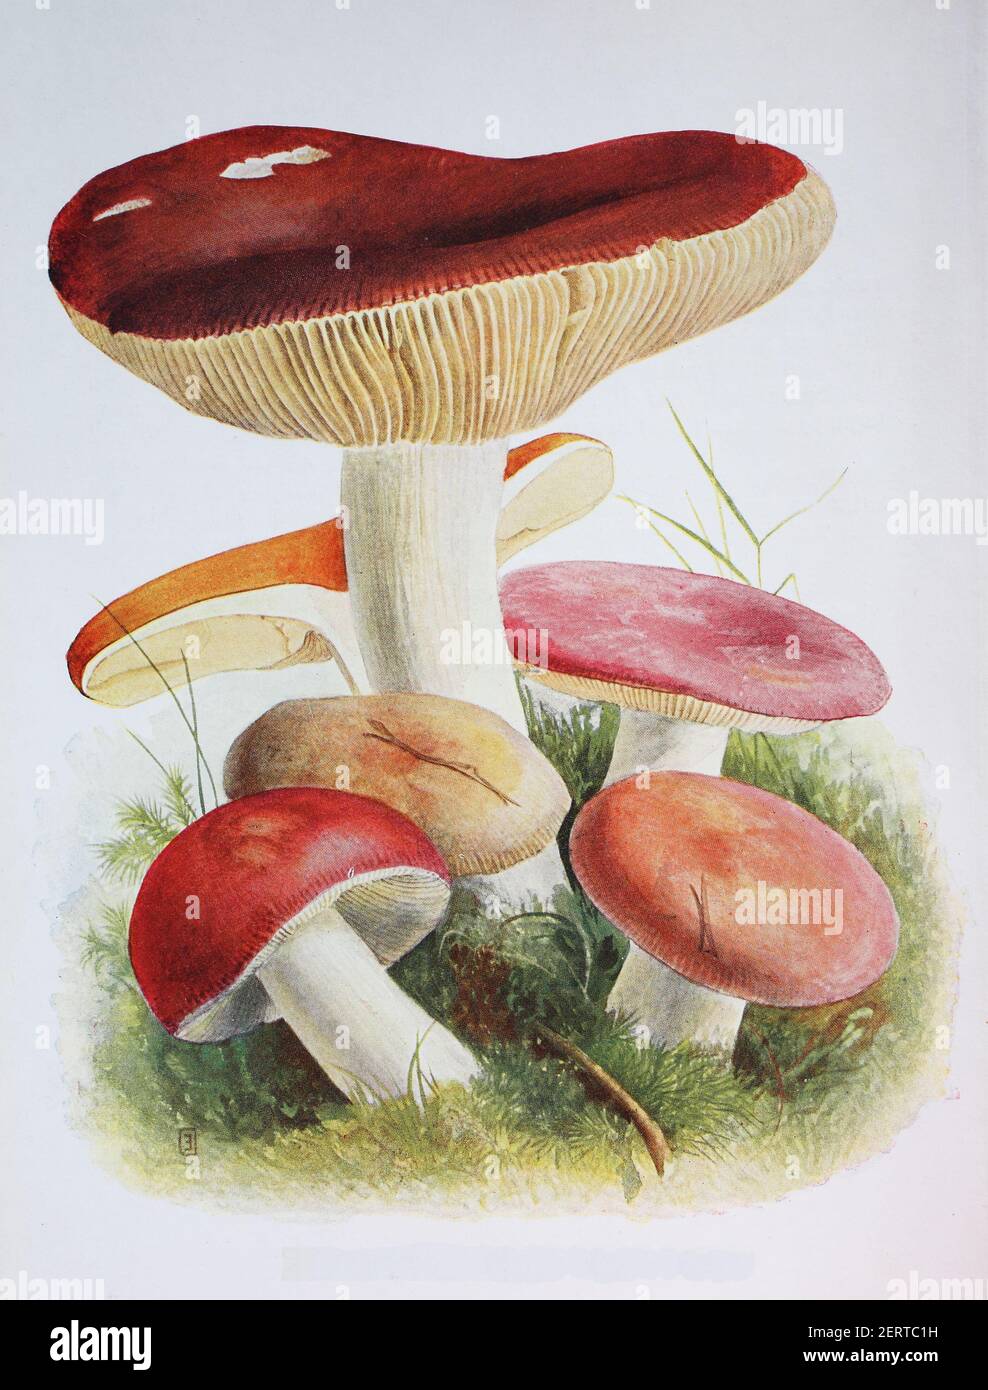 La russula albidula è una specie di fungo del genere Russula, riproduzione digitale di un'immagine di Emil Doerstling (1859-1940) Foto Stock